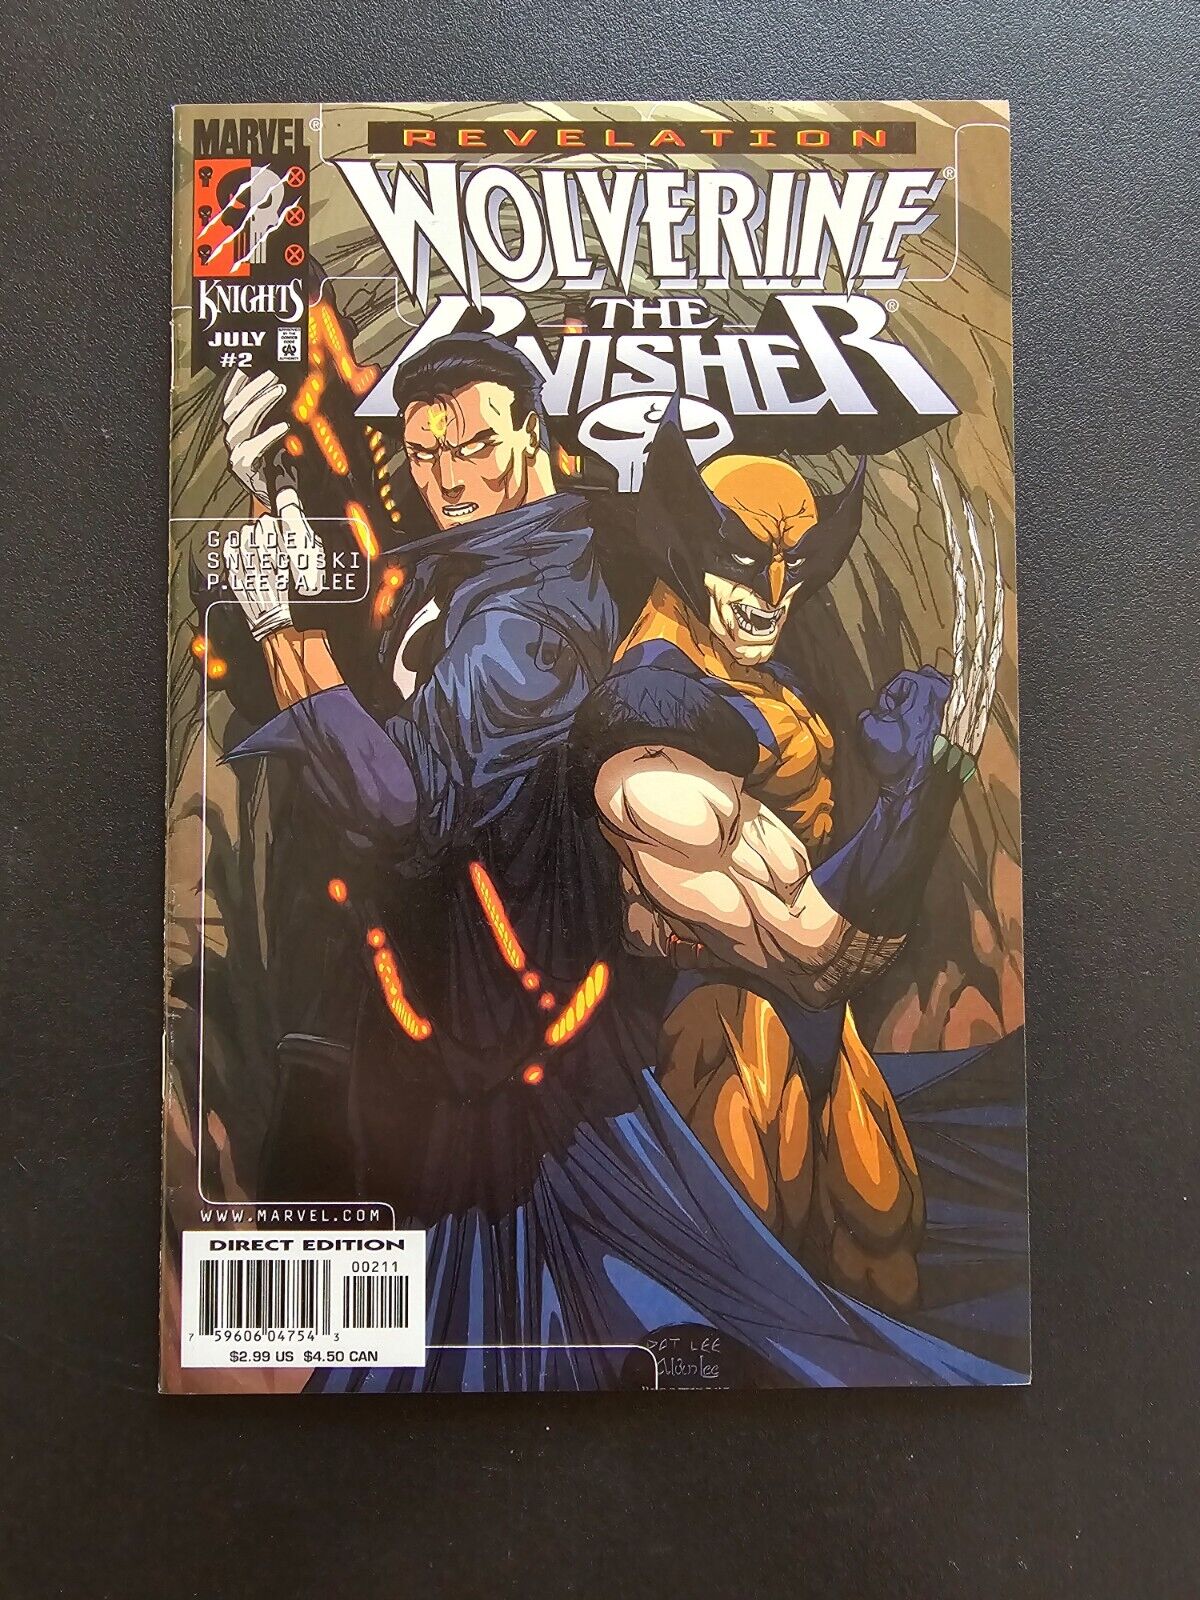 Marvel Comics Wolverine Punisher Revelation #2 July 1999 Pat Lee art